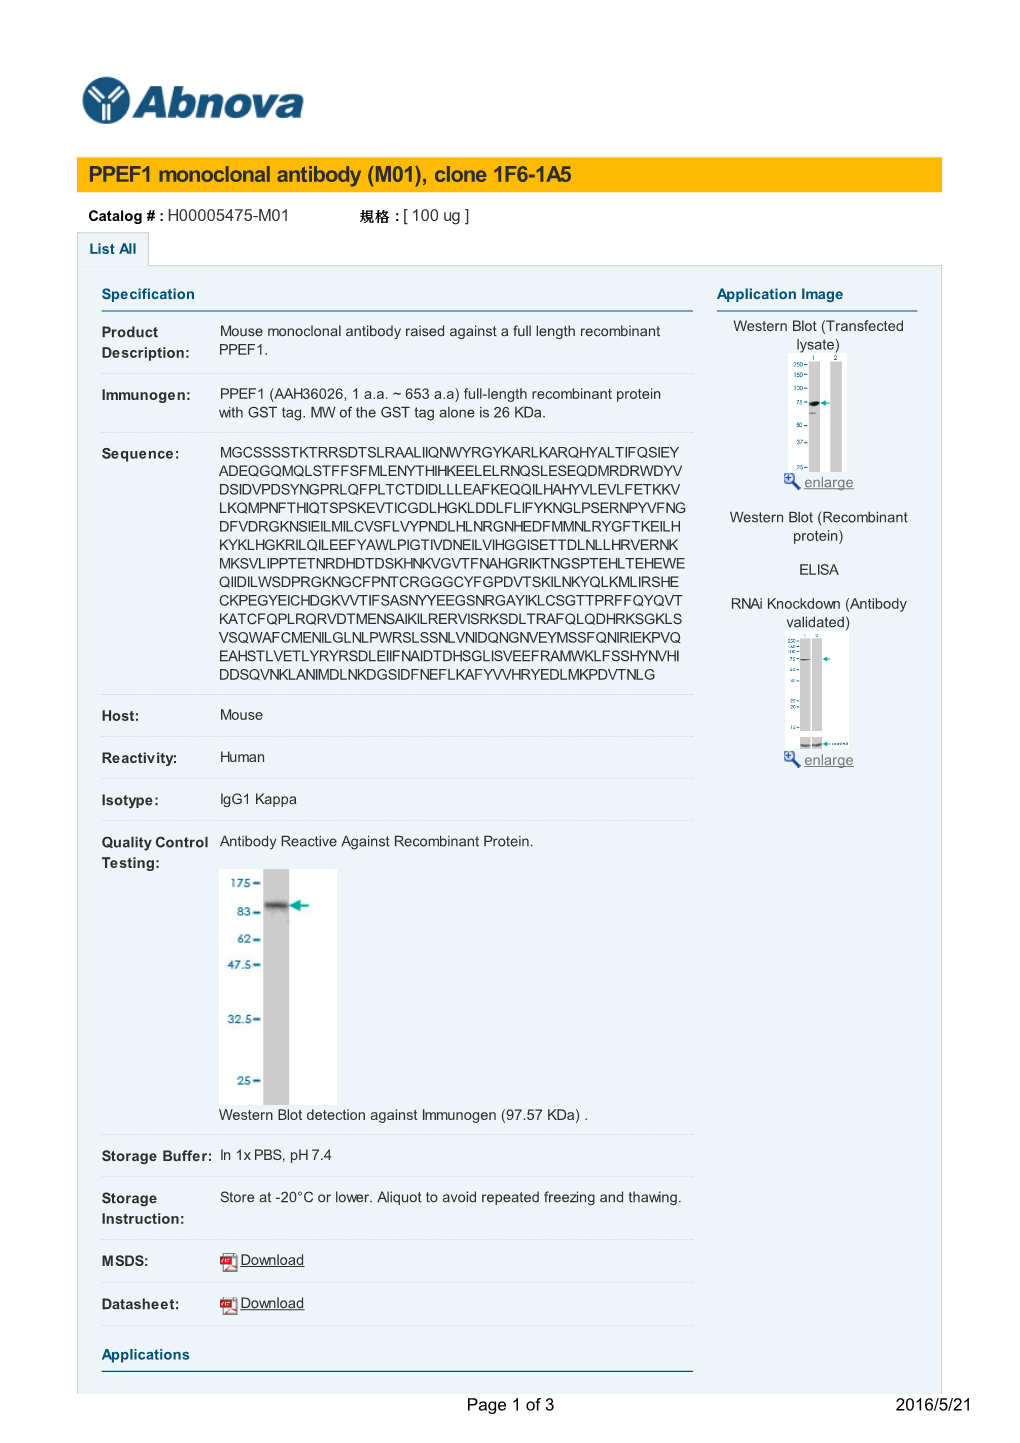 PPEF1 Monoclonal Antibody (M01), Clone 1F6-1A5